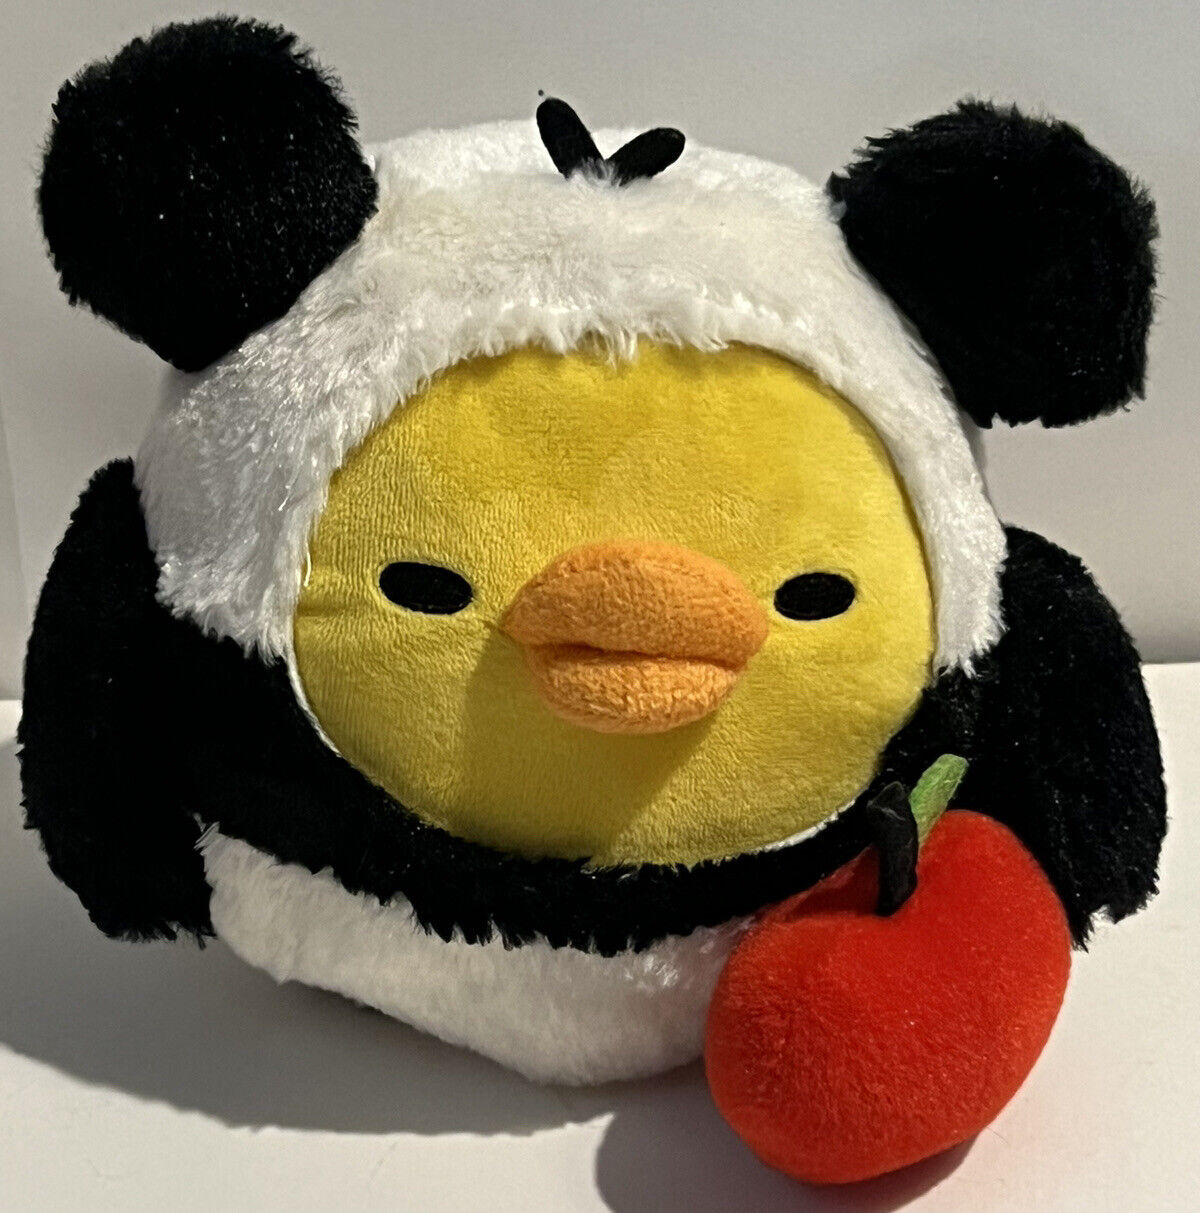 San-X Kiiroitori in Panda Costume Holding an Apple Plush 7” Toy Rilakkuma Duck